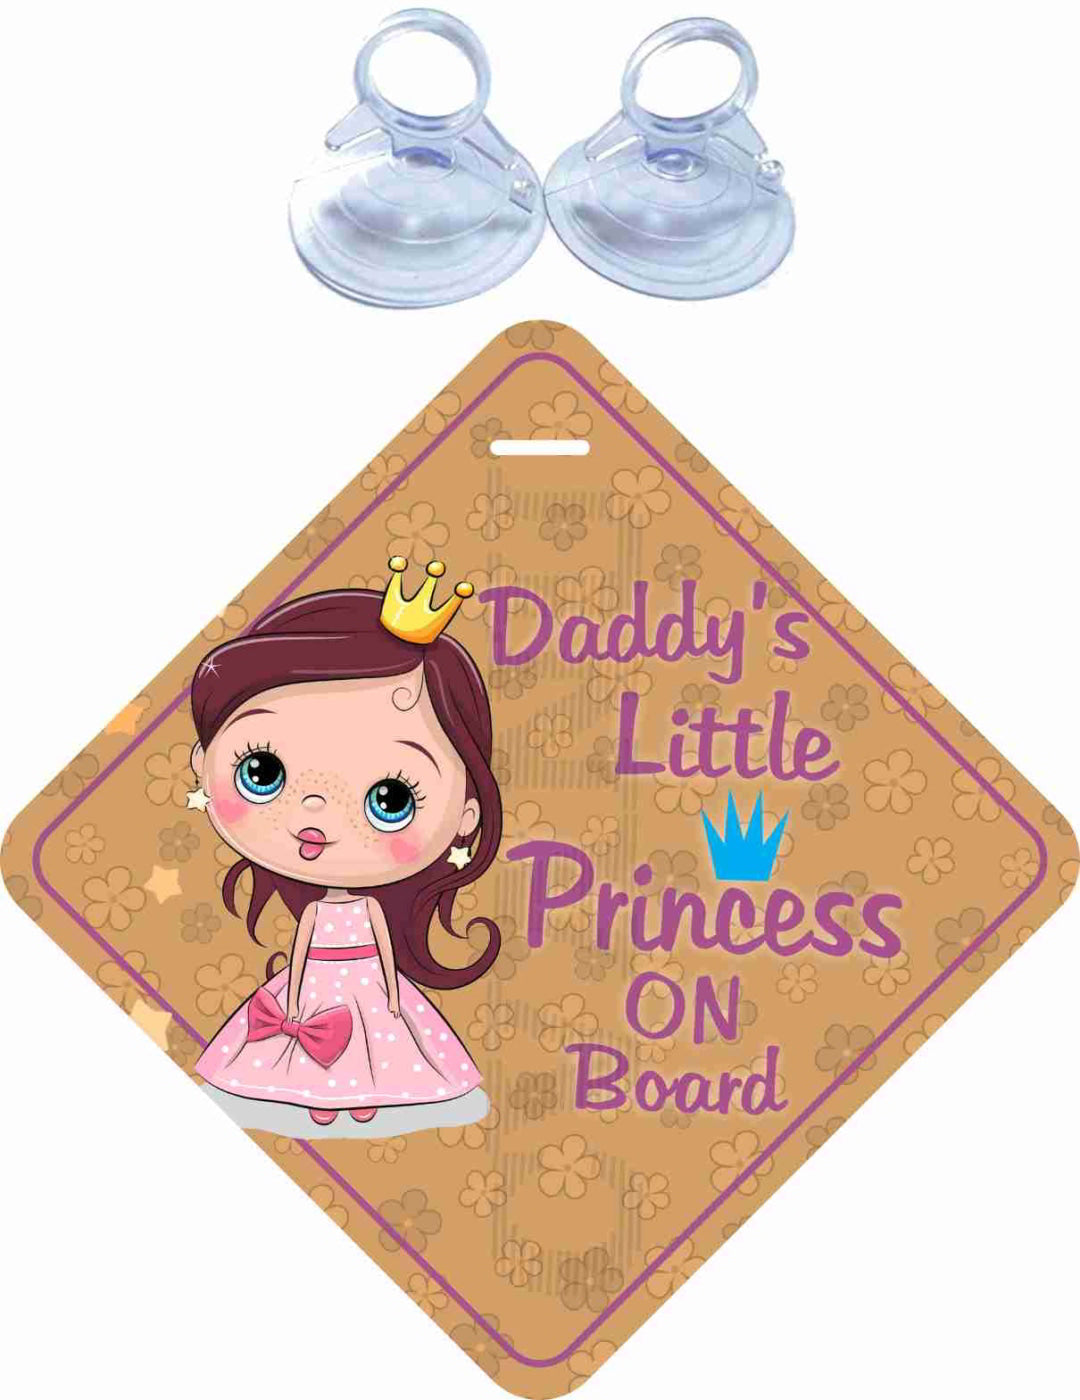 Daddy's Little Princess on Board Safety Sticker